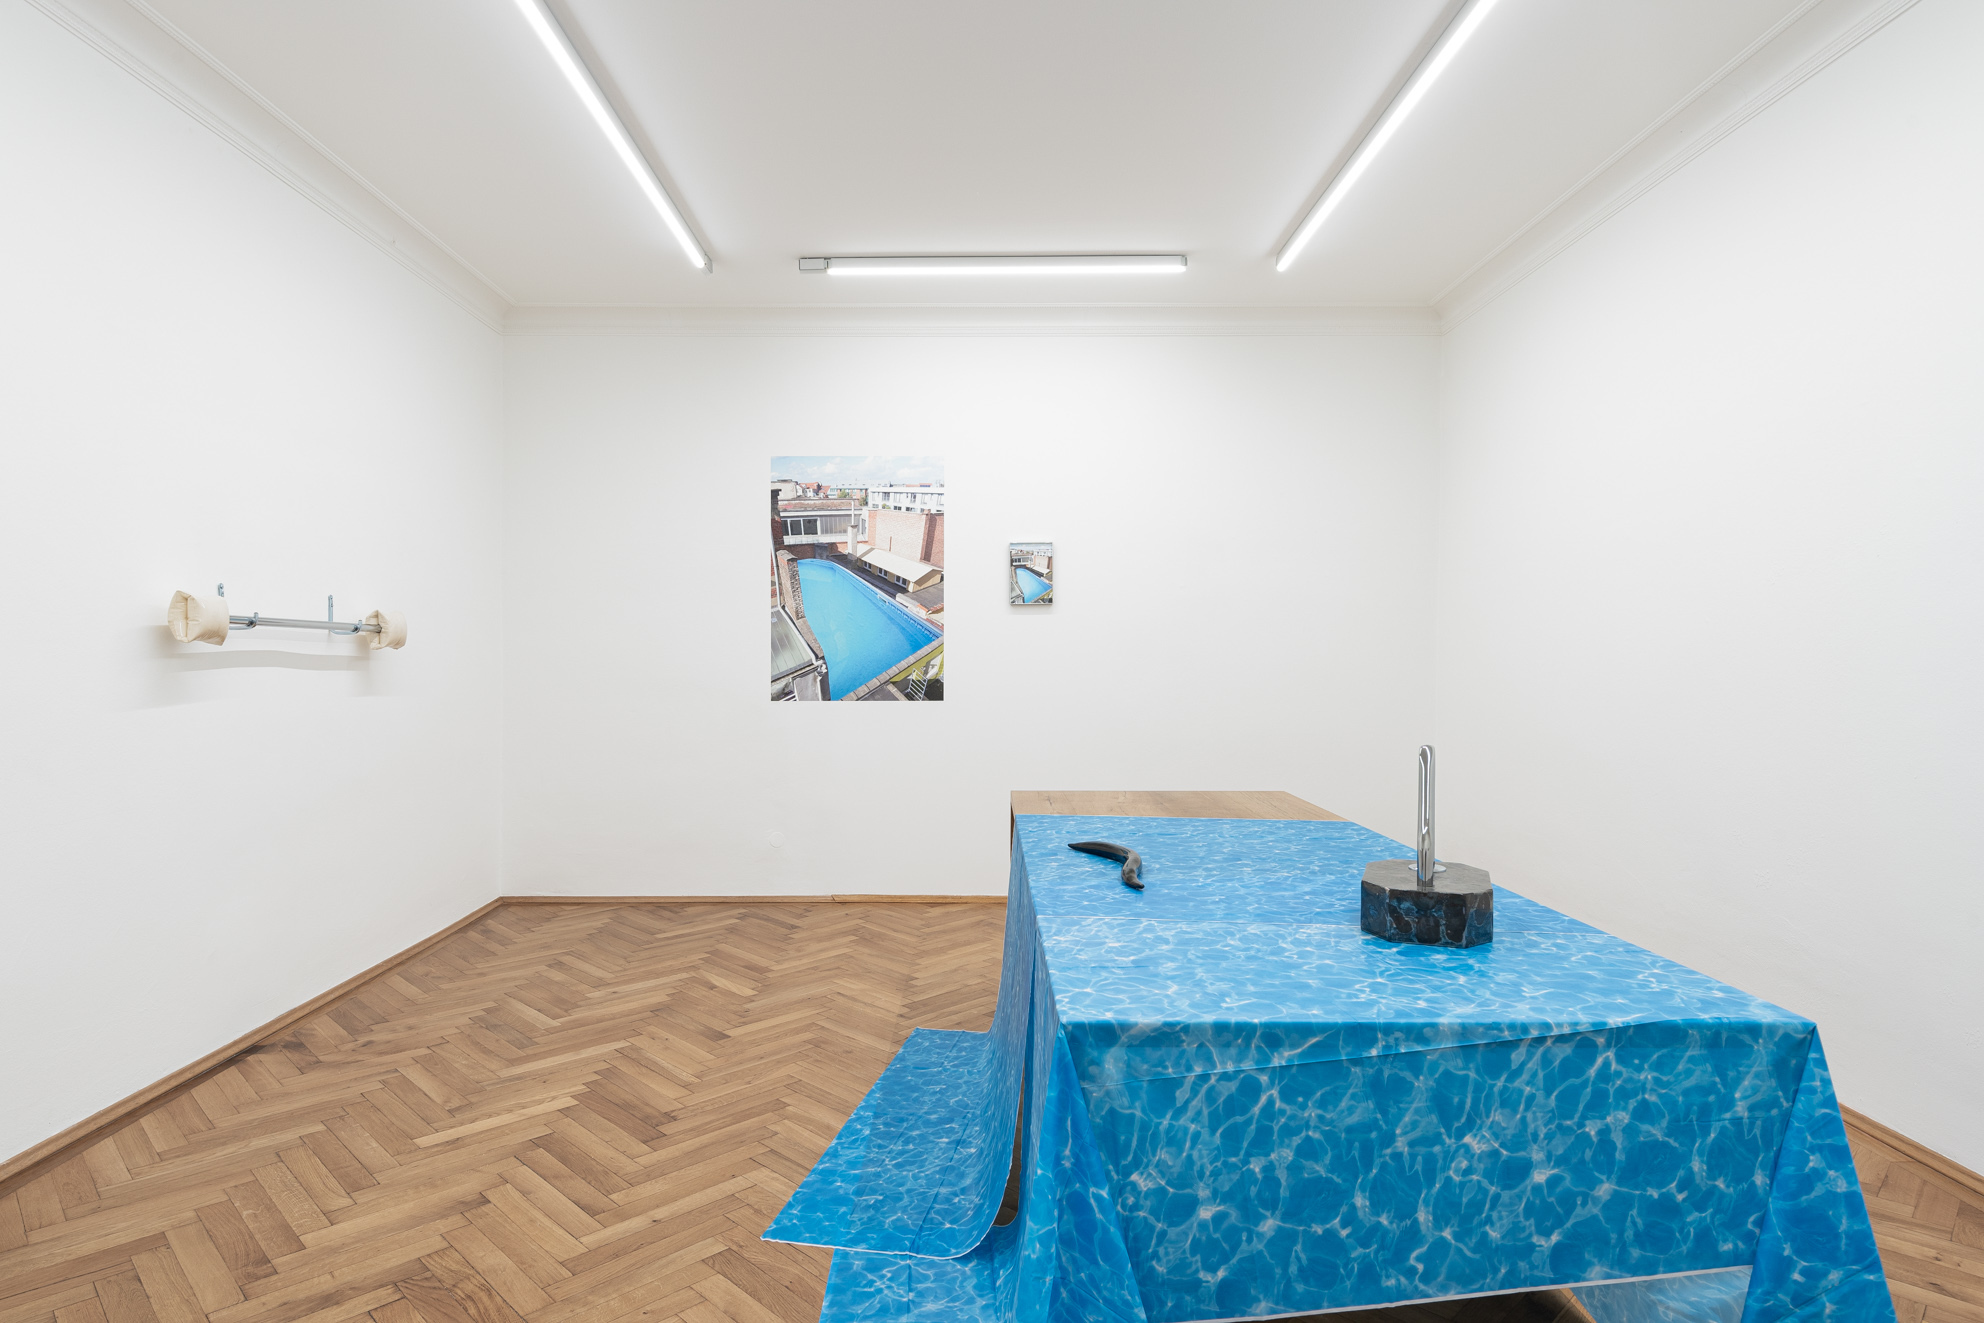 Installation view, Judith Adelmann, "take me to the river", Britta Rettberg Munich